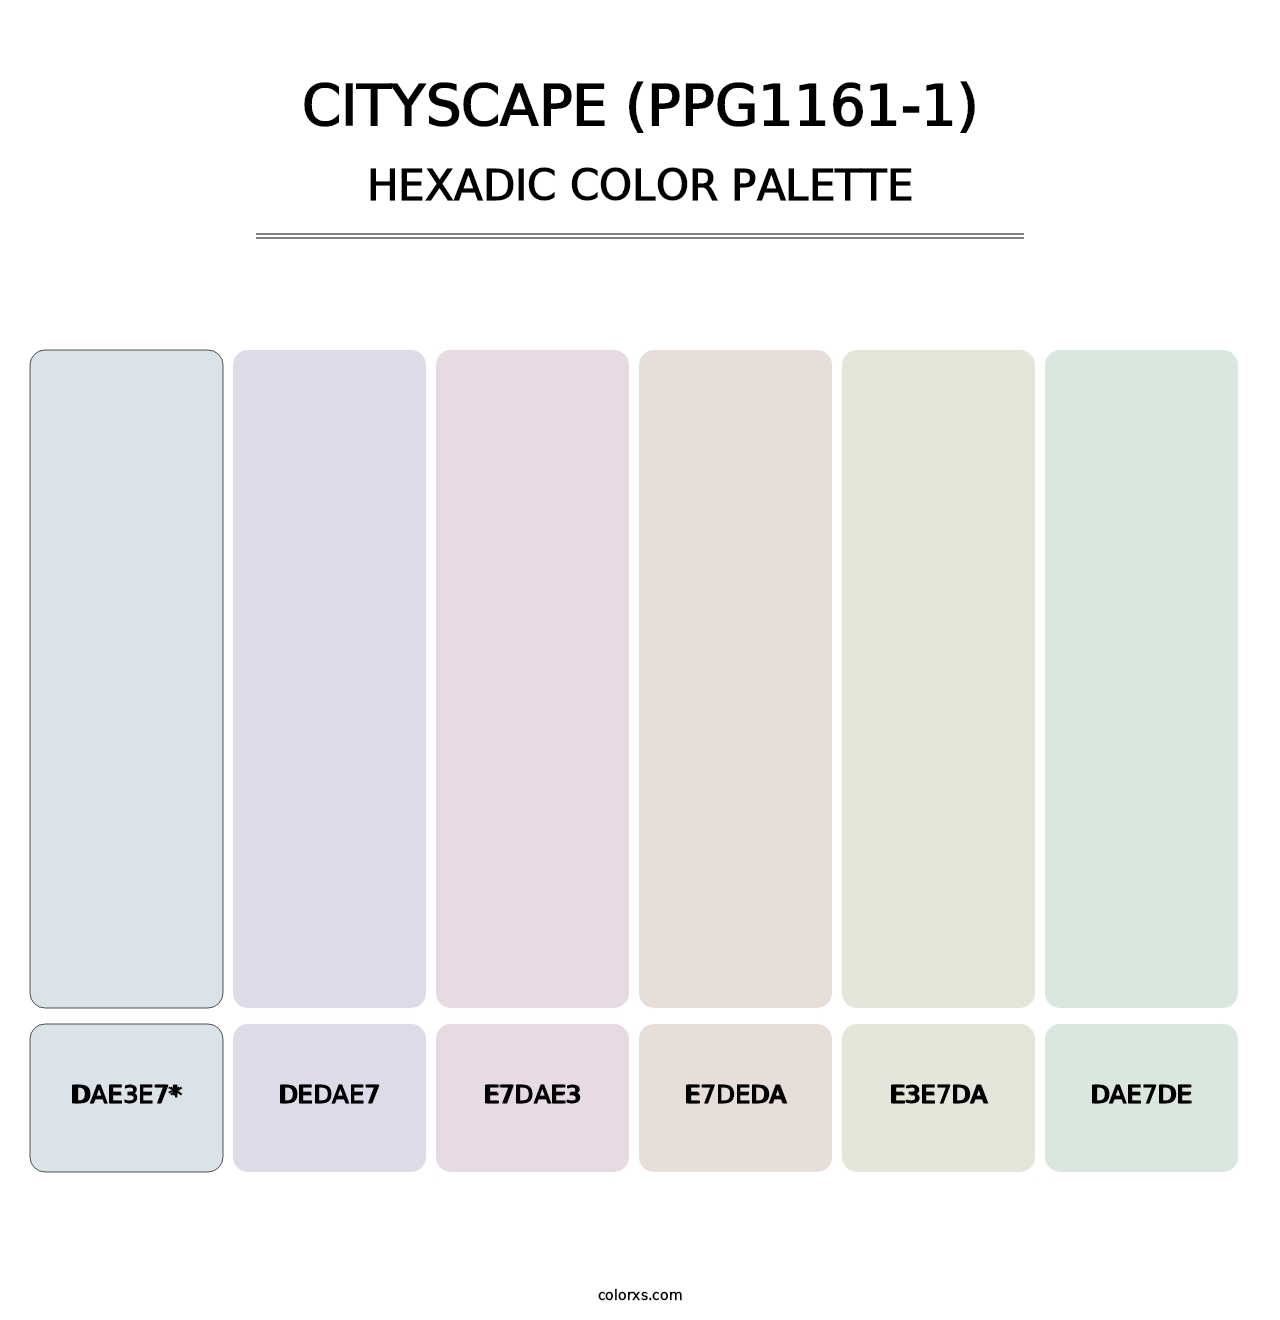 Cityscape (PPG1161-1) - Hexadic Color Palette